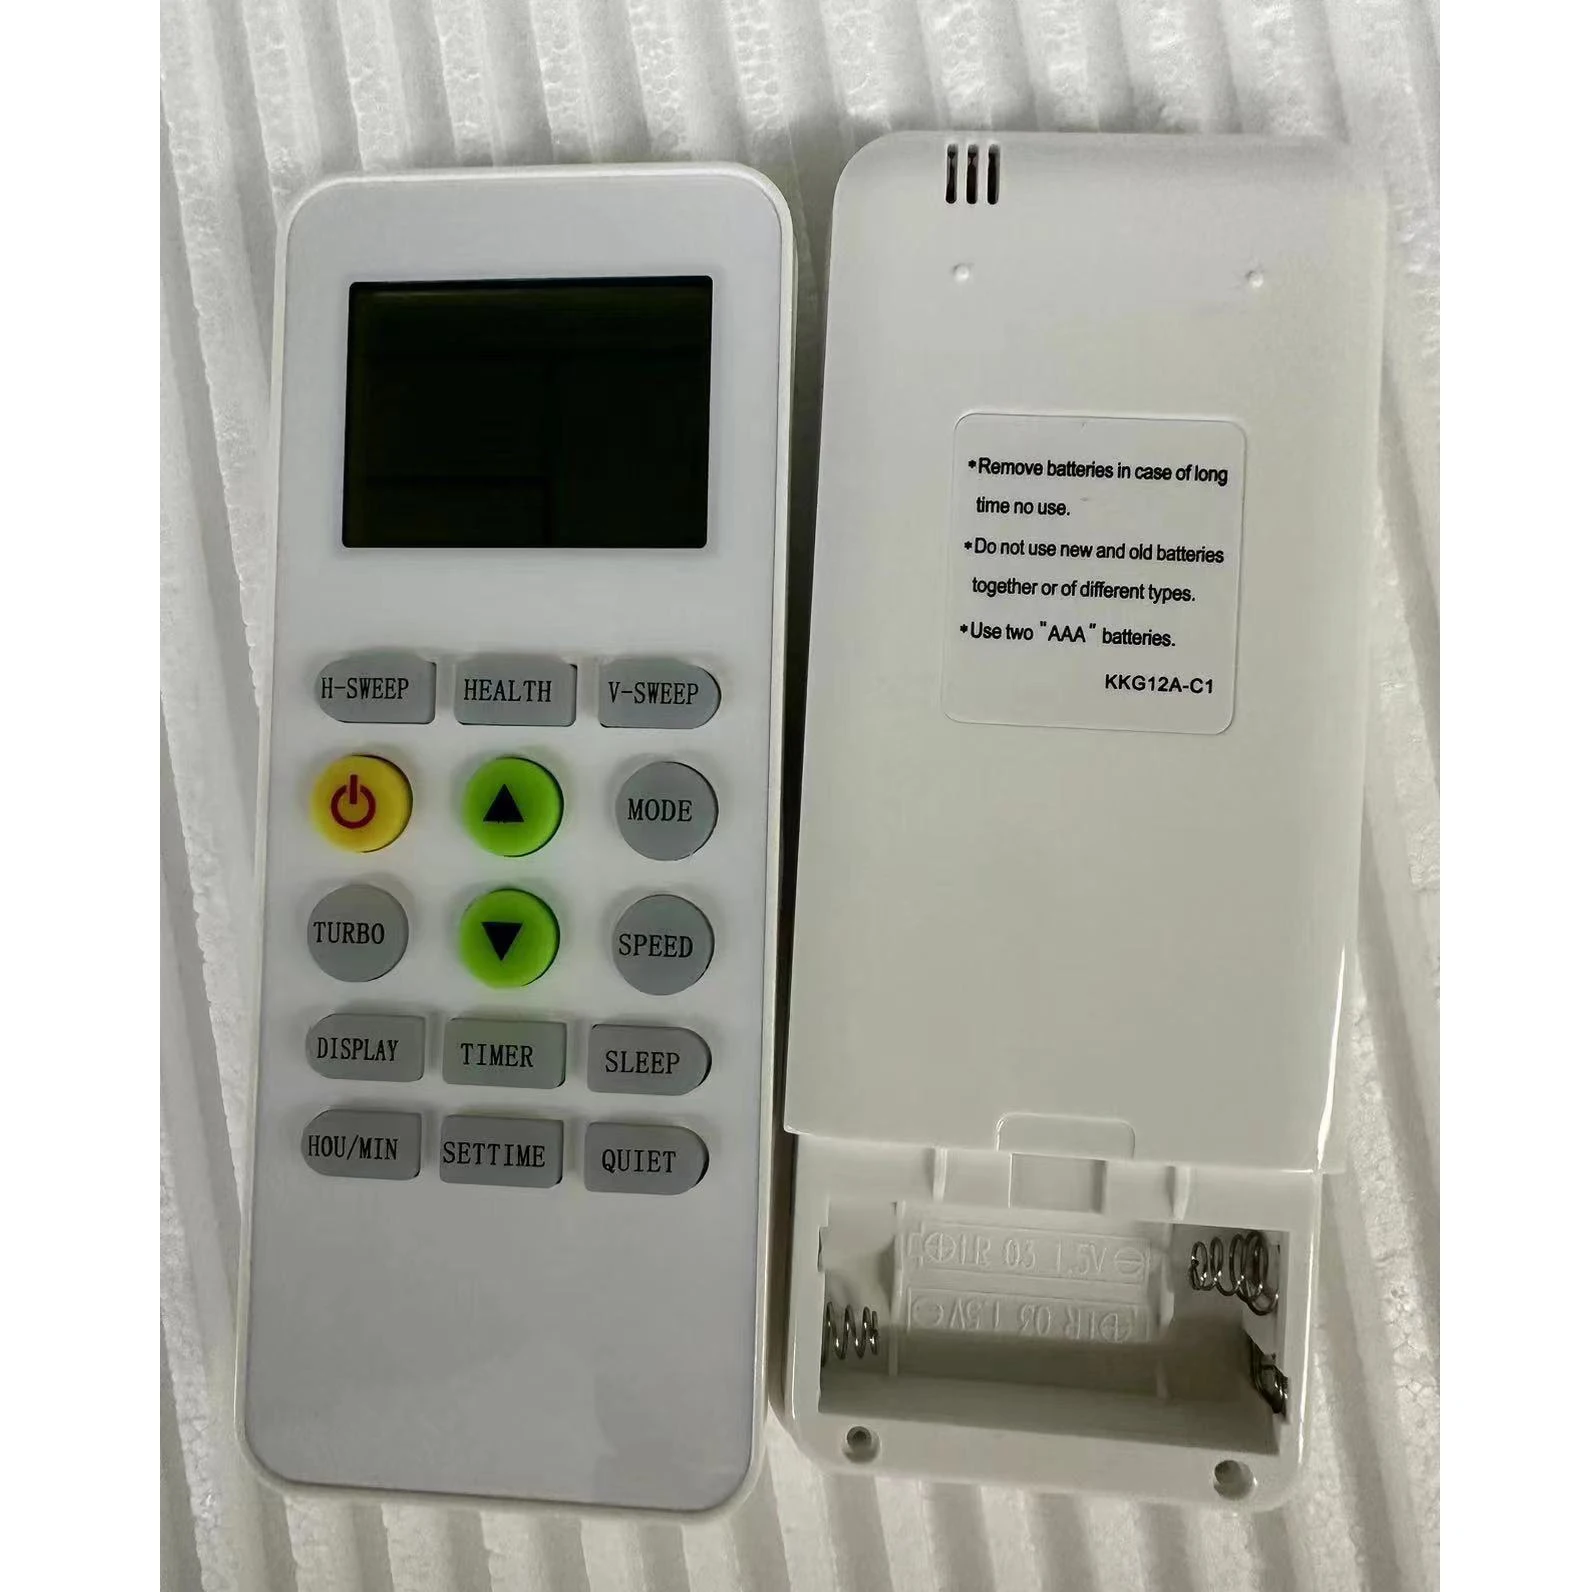 

KKG12A-C1 air conditioner Remote Control Replacement for Sumikura SK / Prime / Onix Air Conditioner